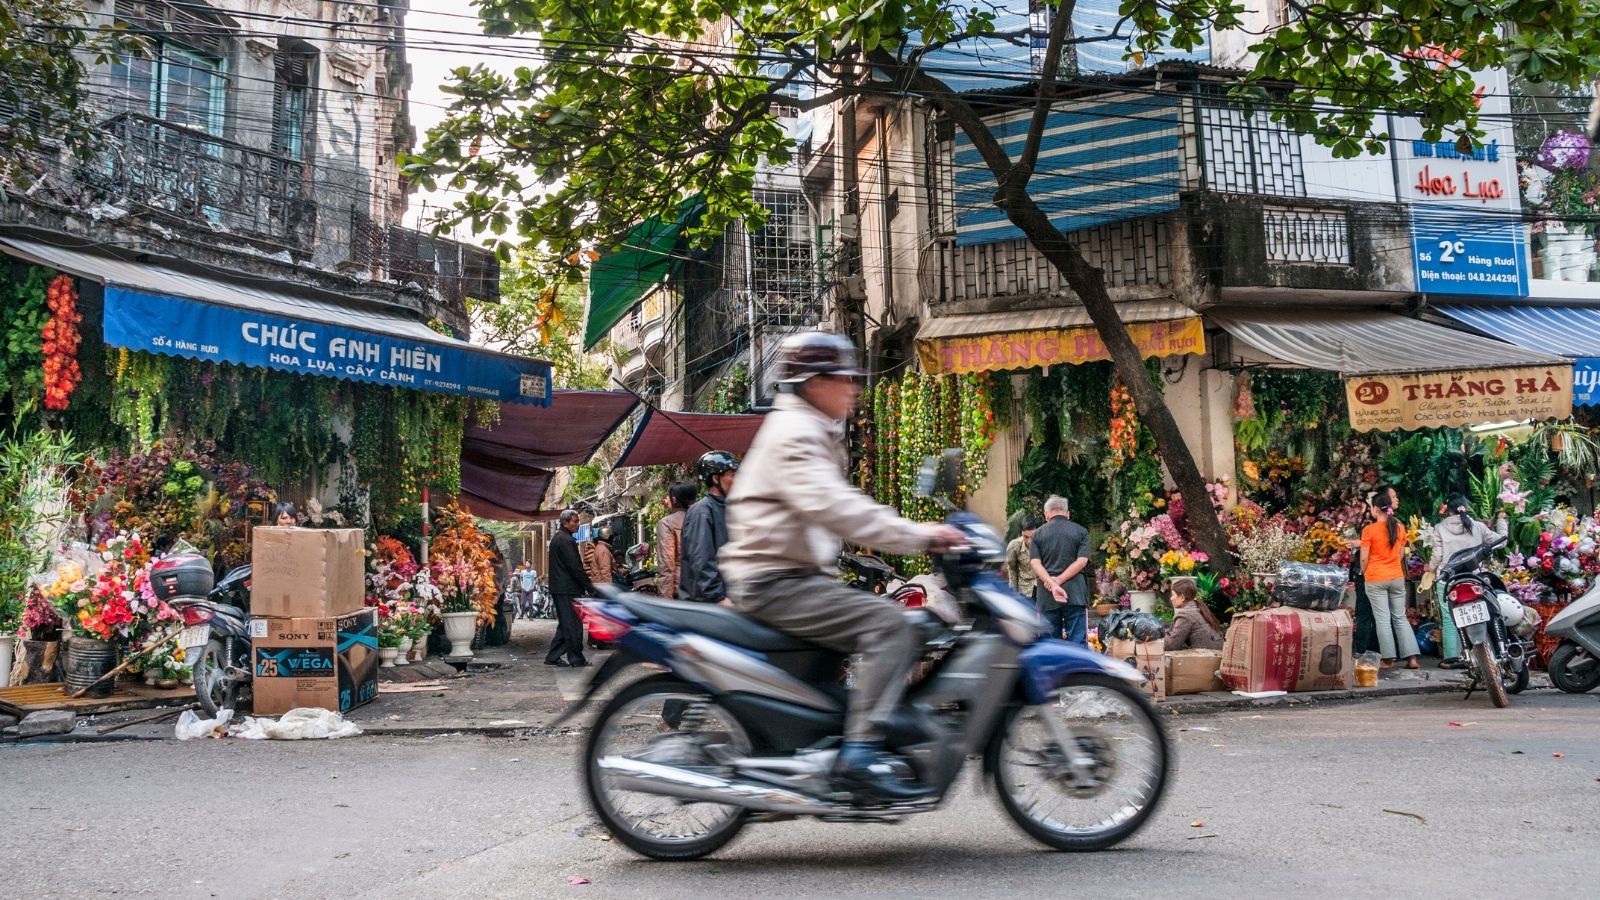 Hanoi - The must-visit destination in north Vietnam